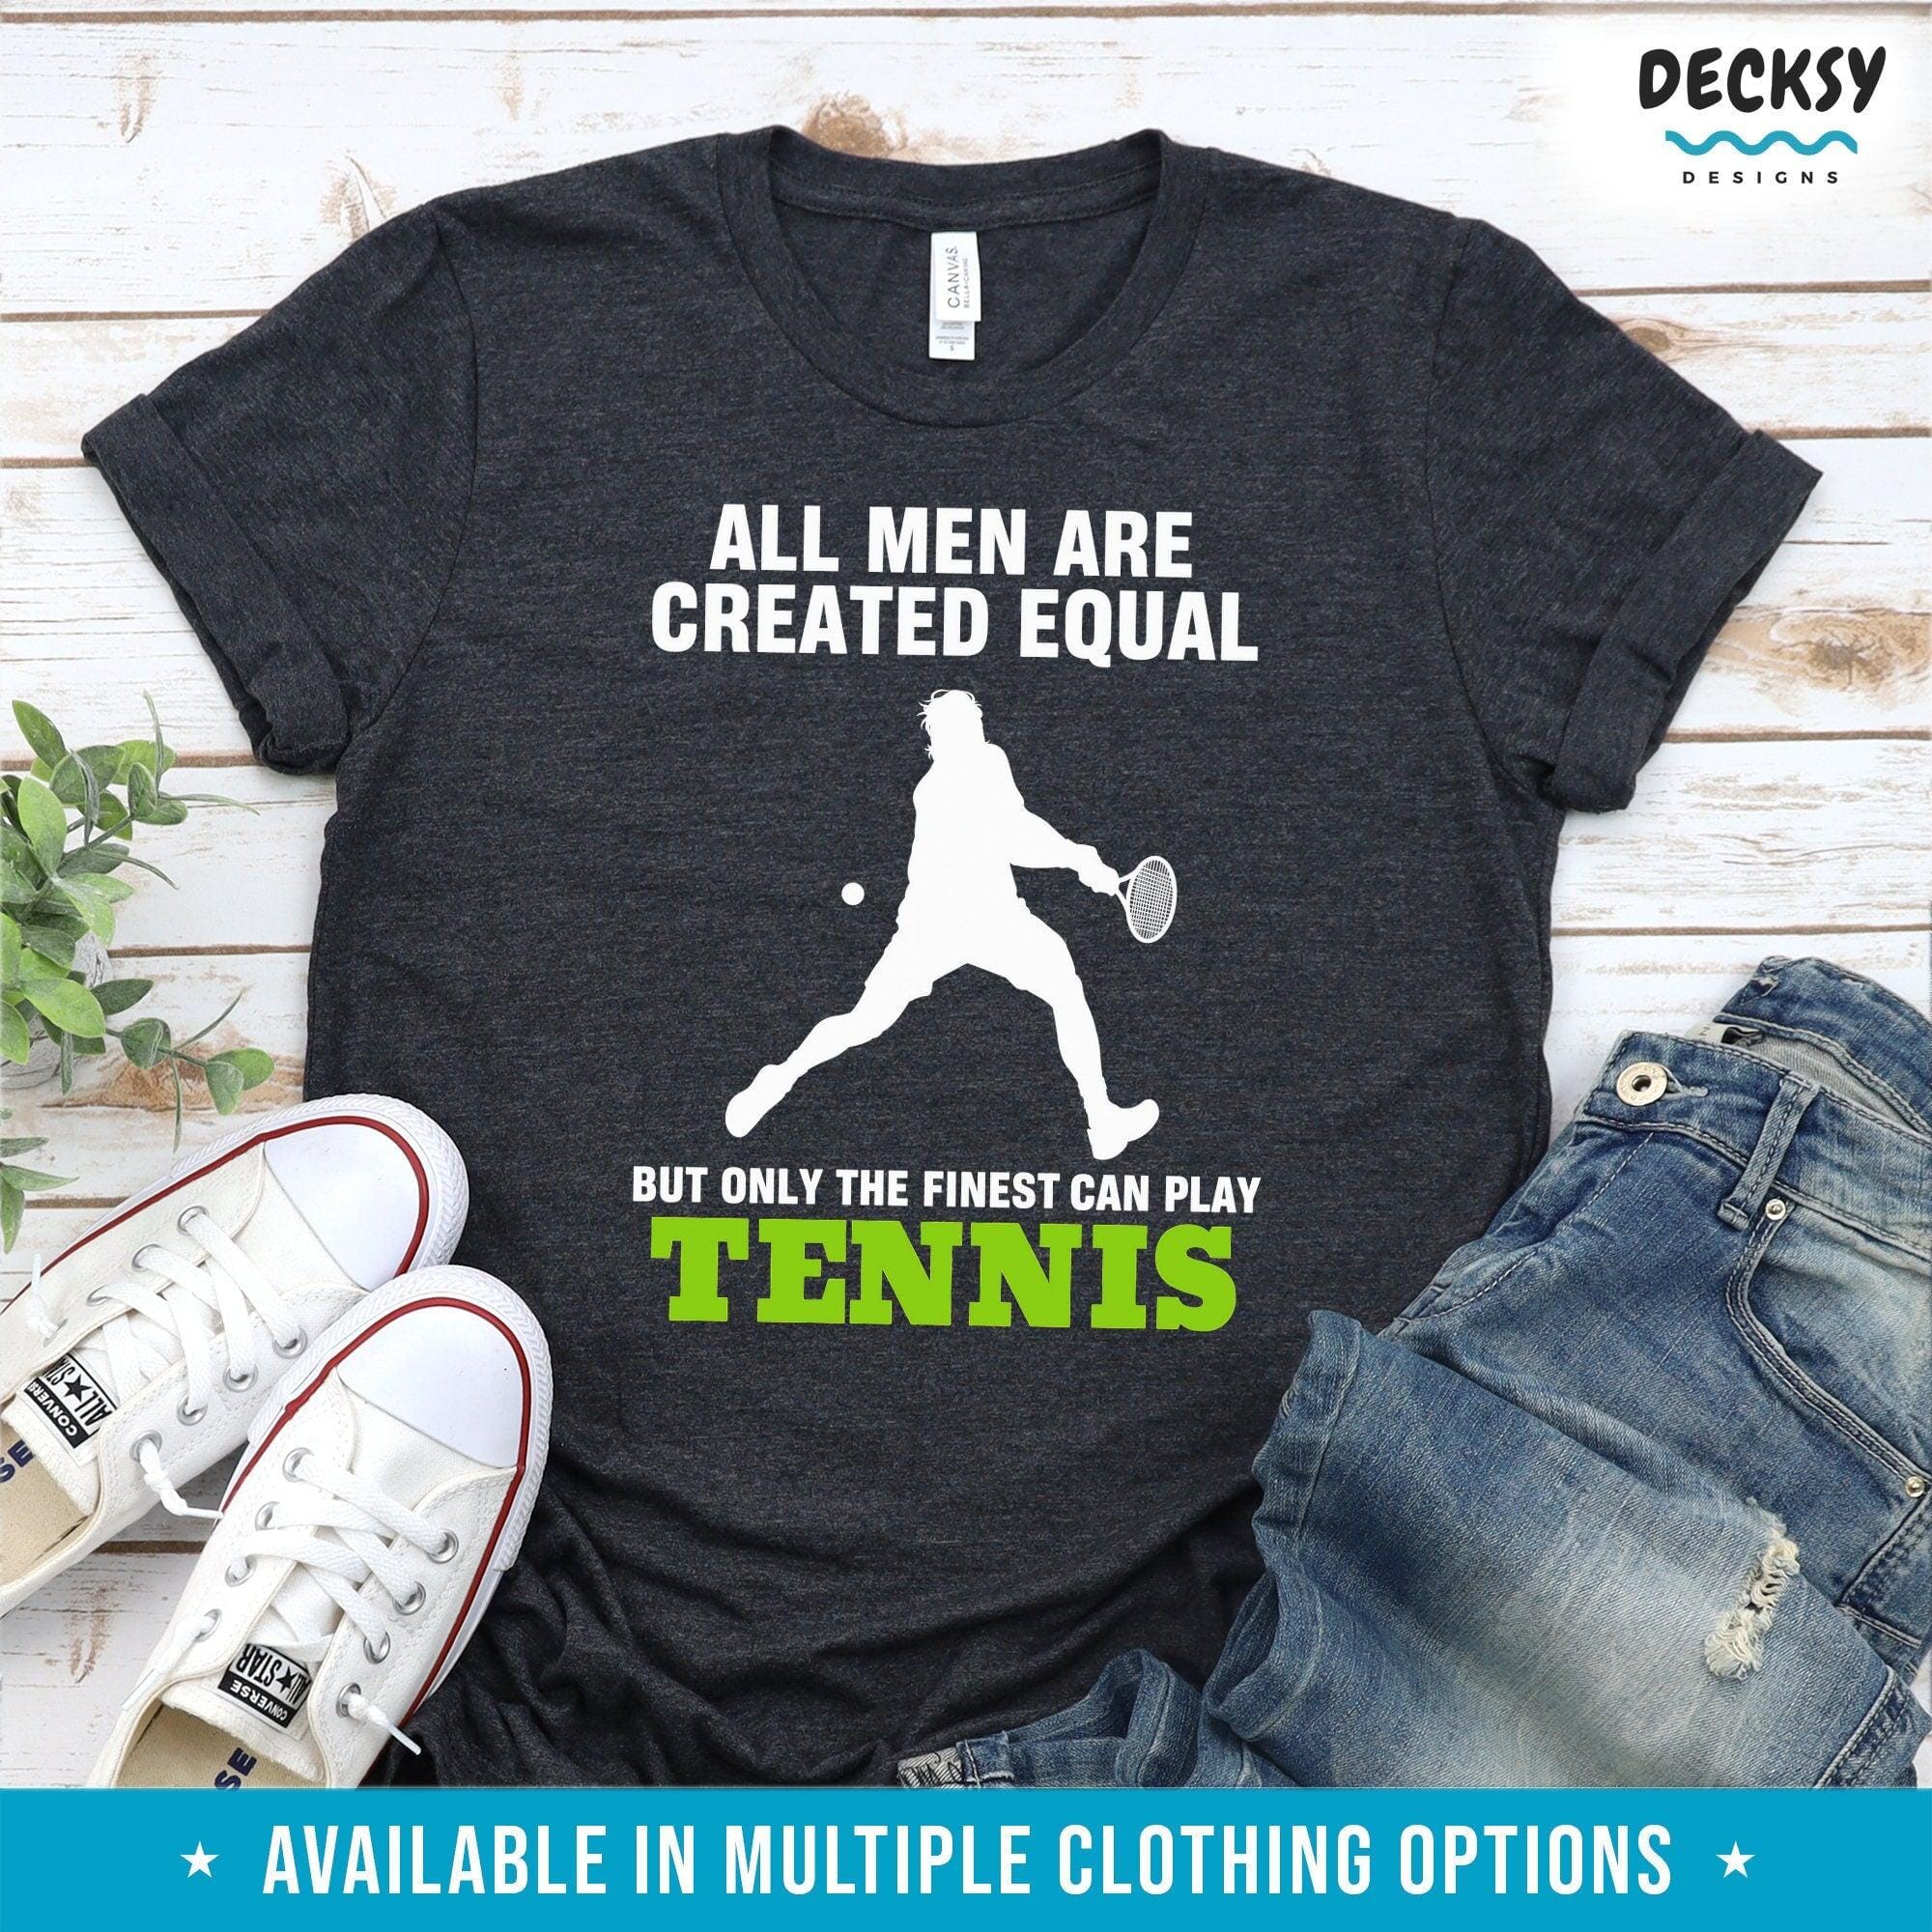 Tennis Shirt Men, Tennis Player Gift-Clothing:Gender-Neutral Adult Clothing:Tops & Tees:T-shirts:Graphic Tees-DecksyDesigns